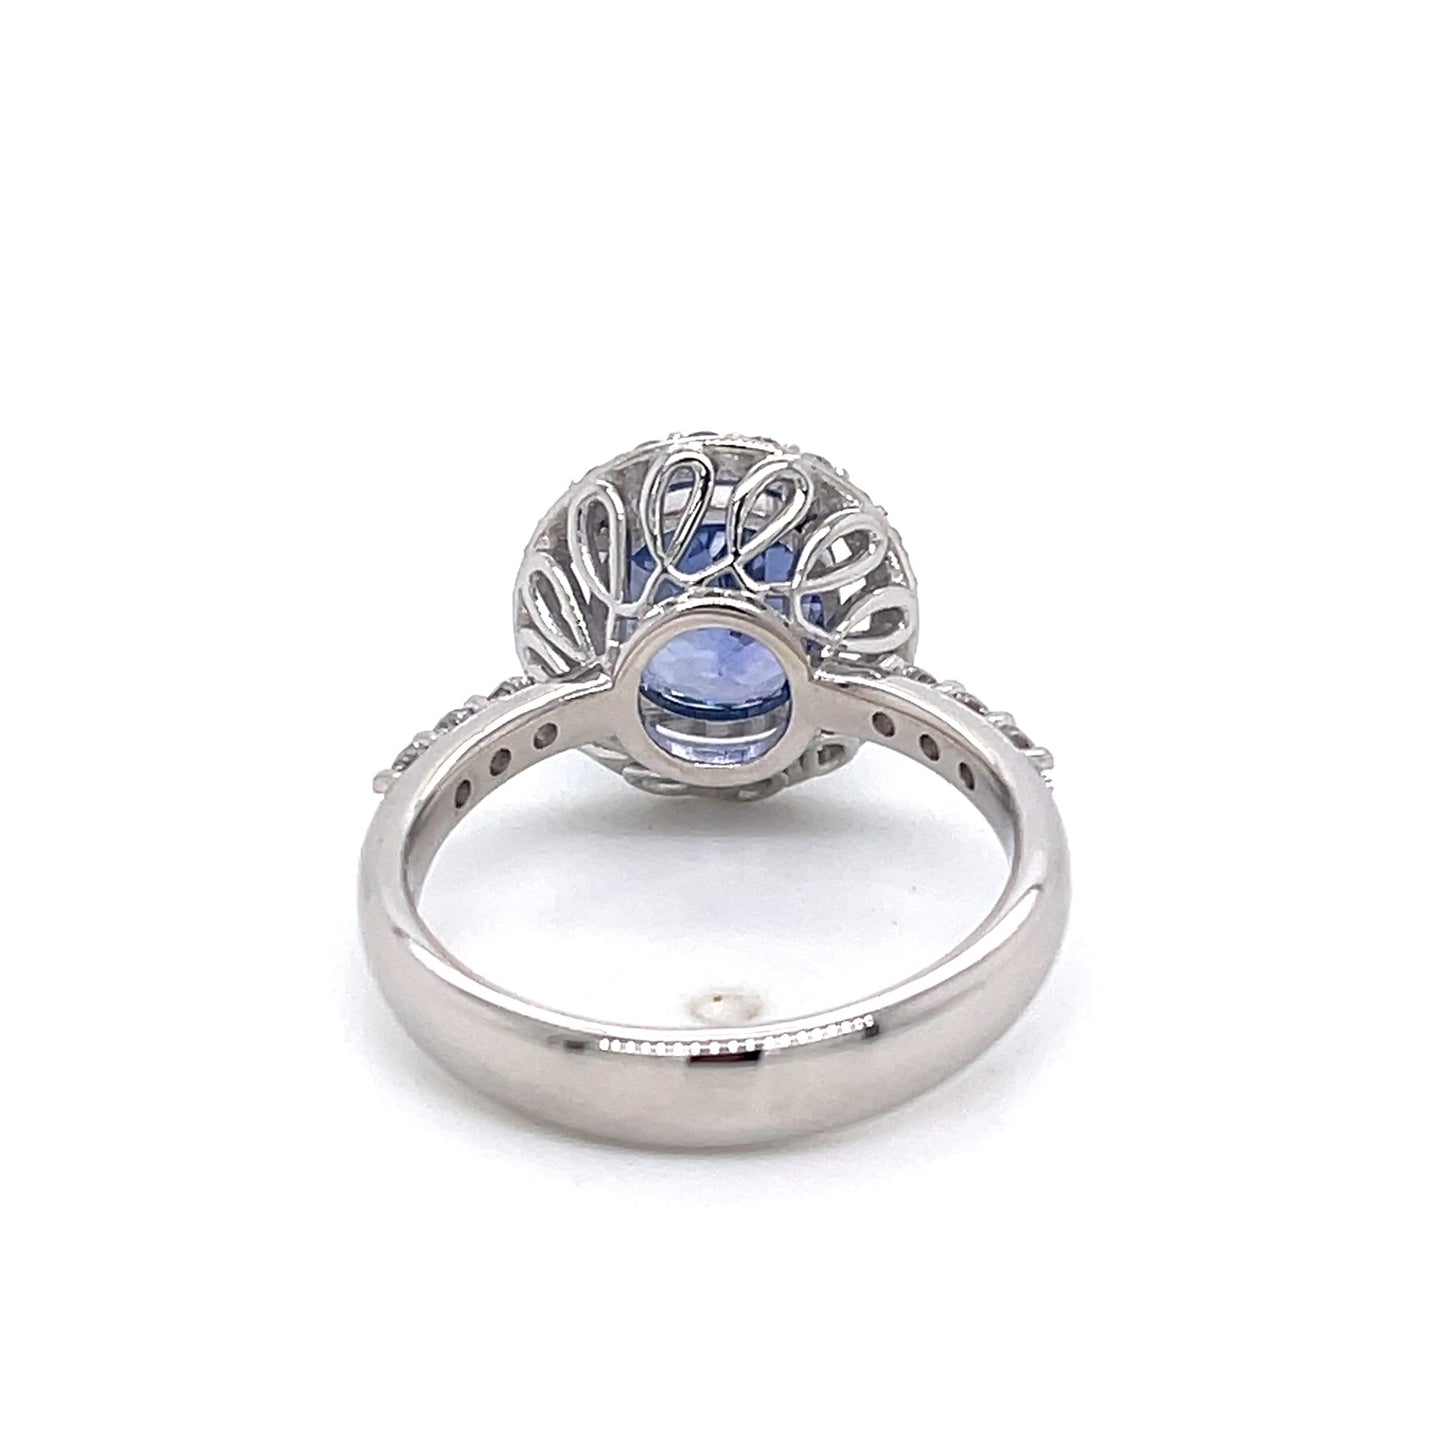 Pastel Blue Sapphire Halo Ring